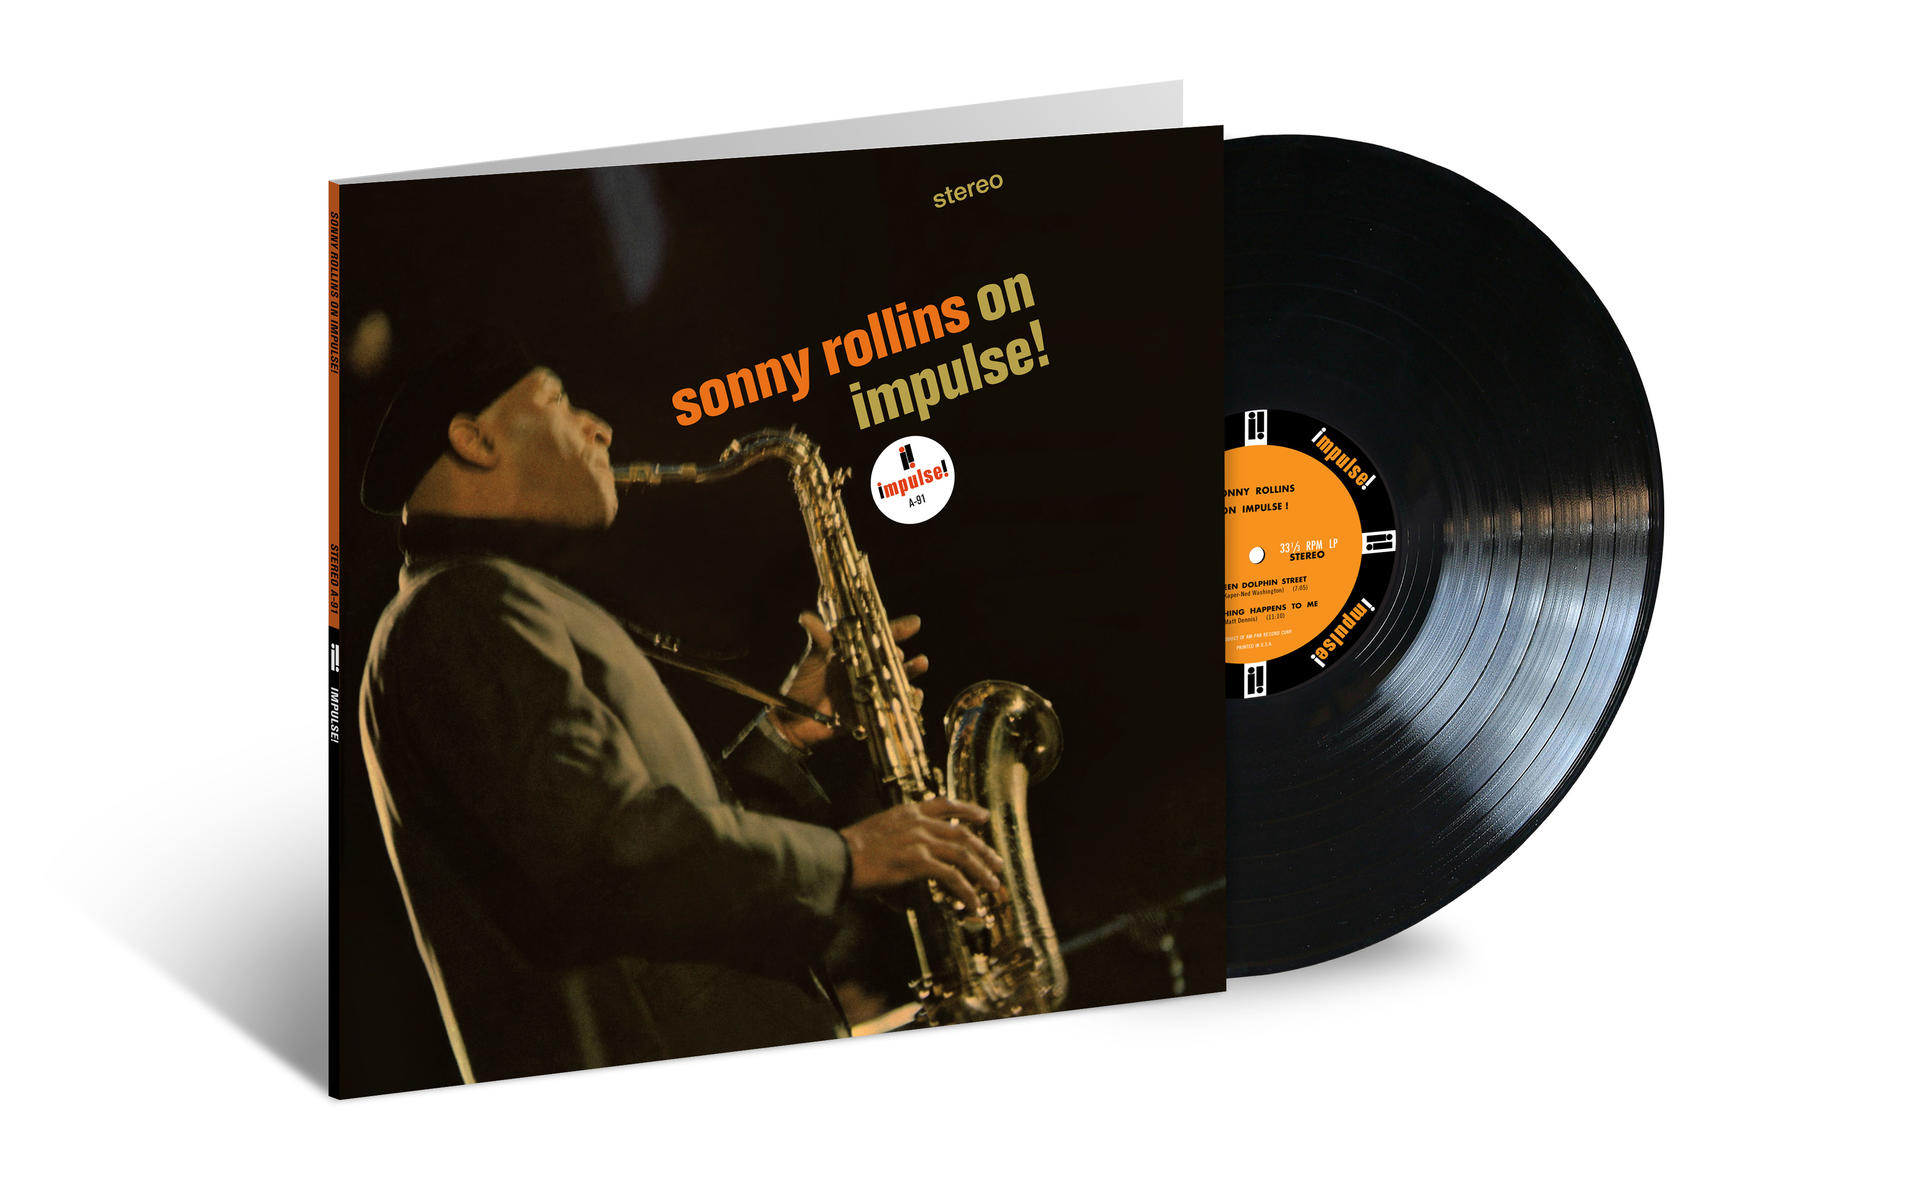 Sonny Rollins - On (Acoustic Impulse! - (Vinyl) Sounds)